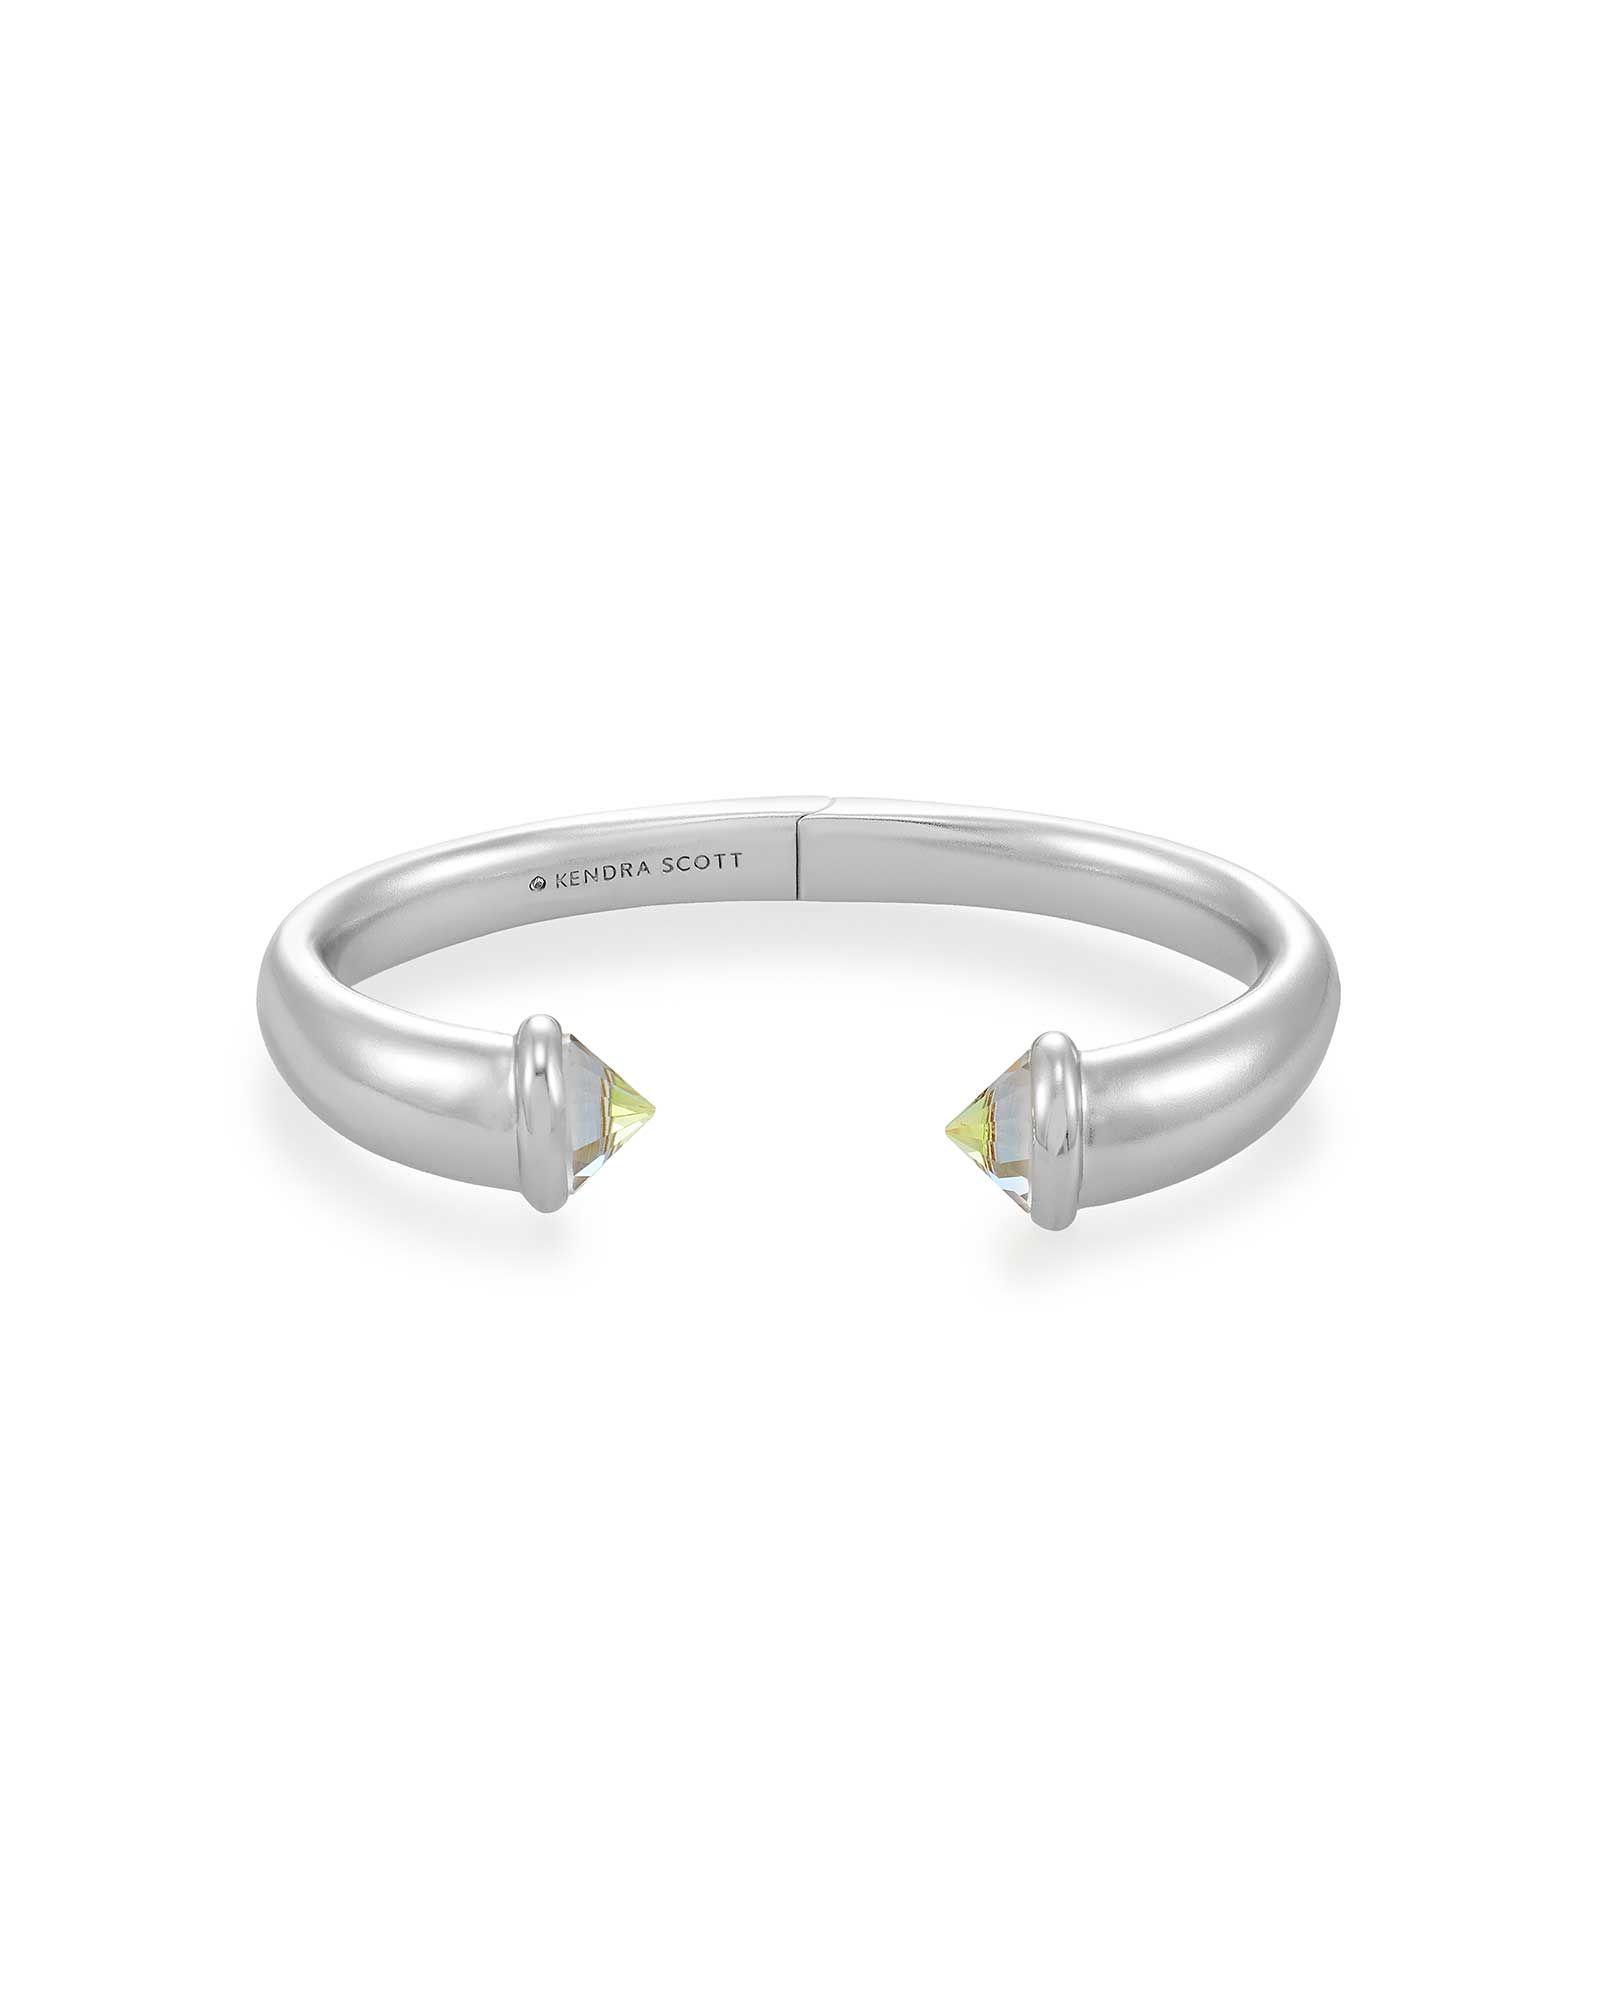 Jolie Silver Cuff Bracelet in Dichroic Glass | Kendra Scott